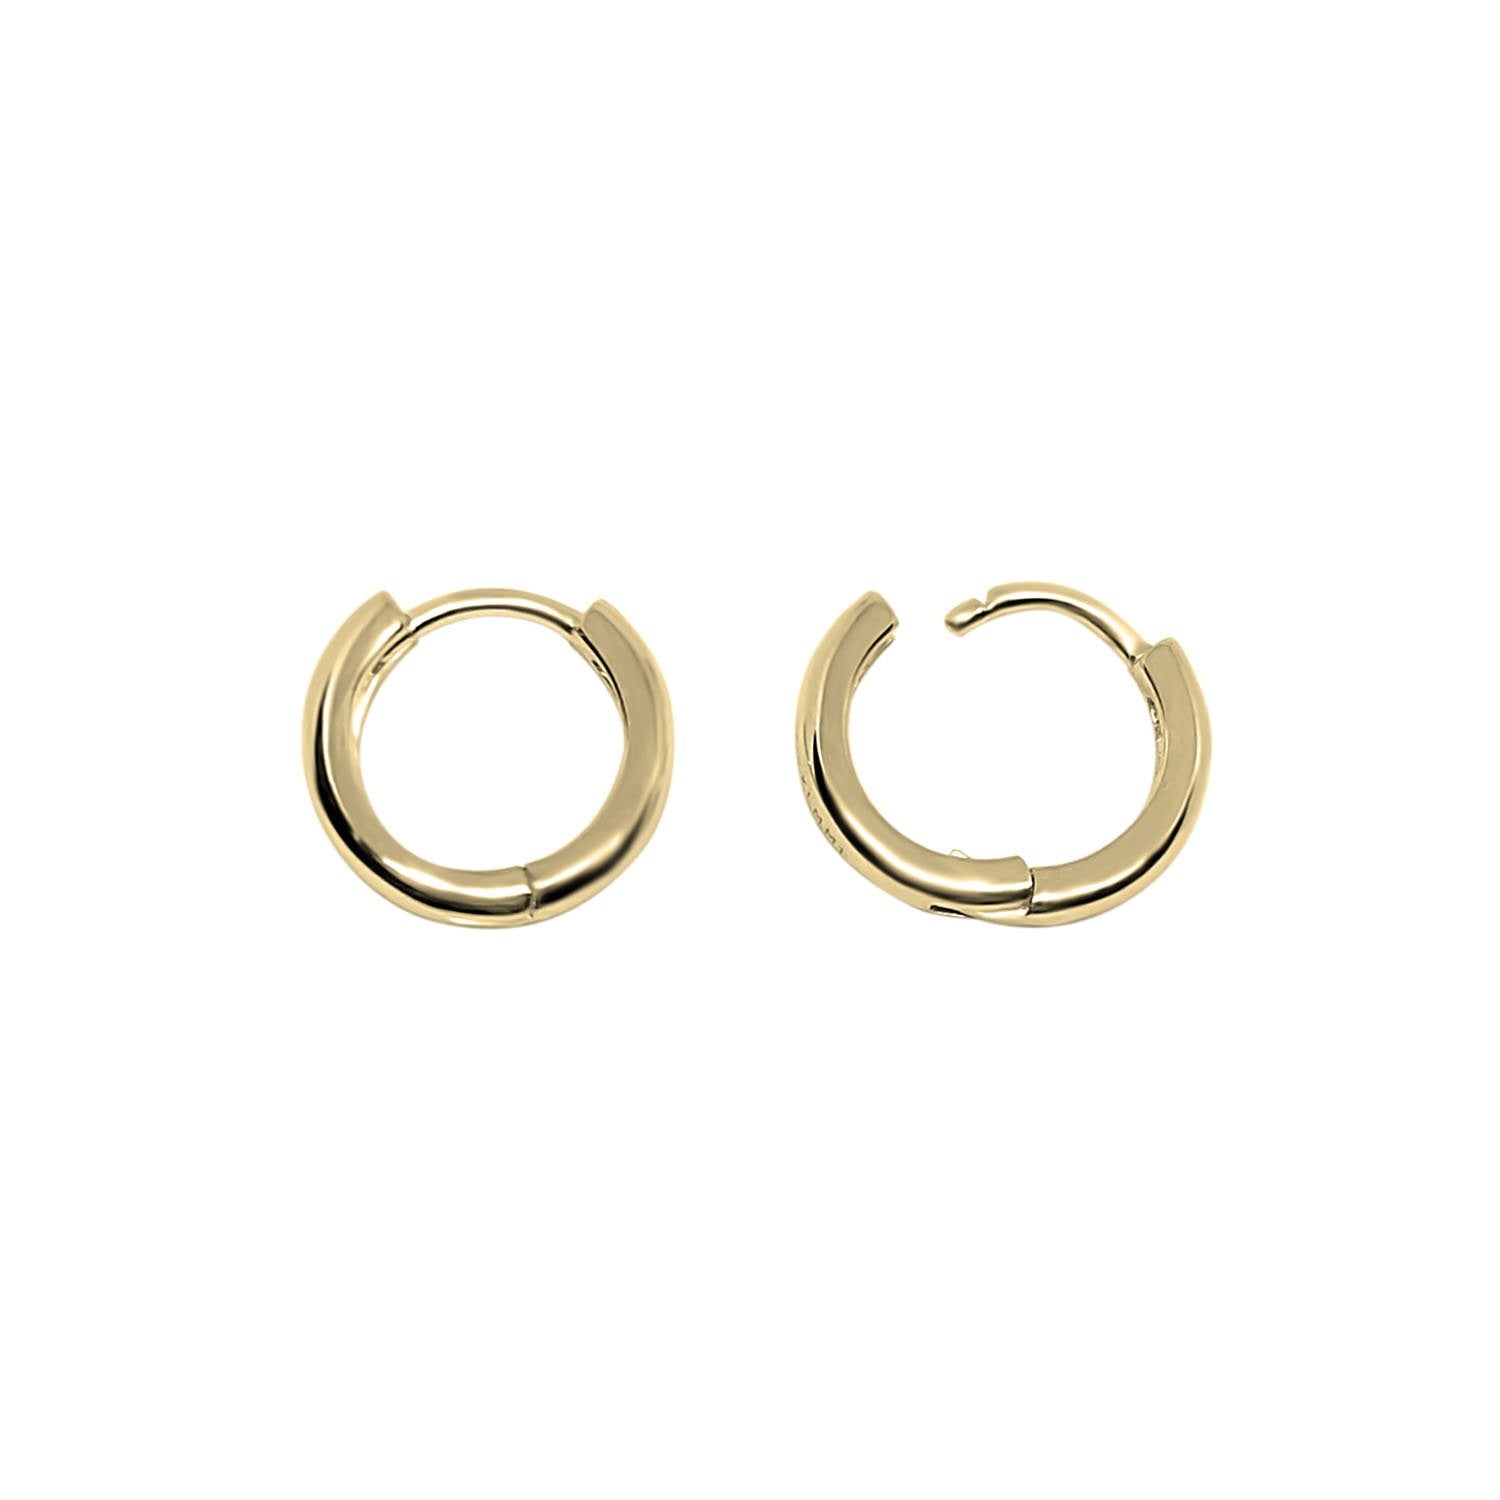 18k gold hoop earrings huggie hinge snap closure clasp every minimal jewelry kemmi colletion boho chic handmade